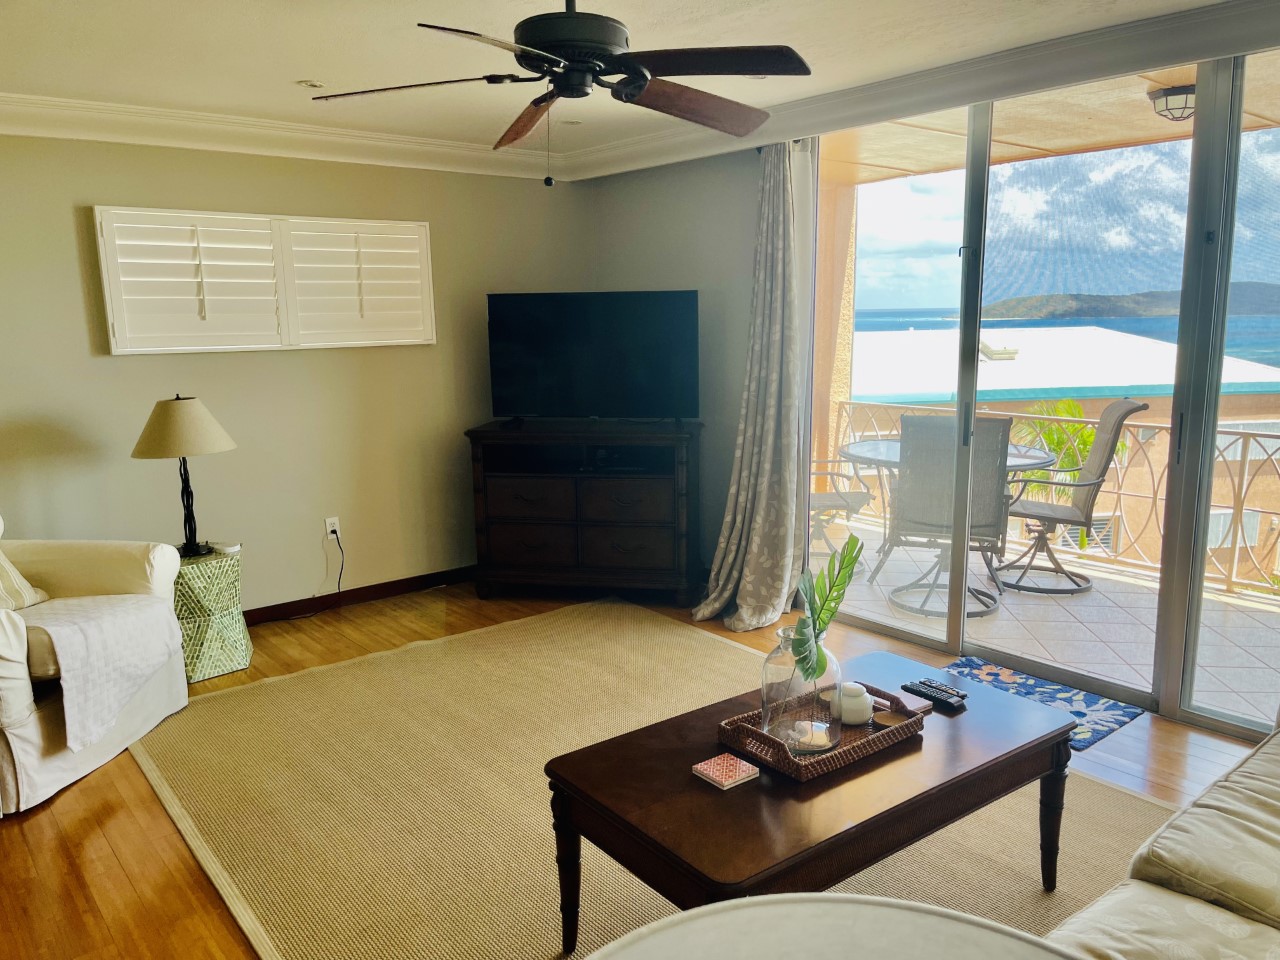 Livingroom Area with Caribbean Sea Views